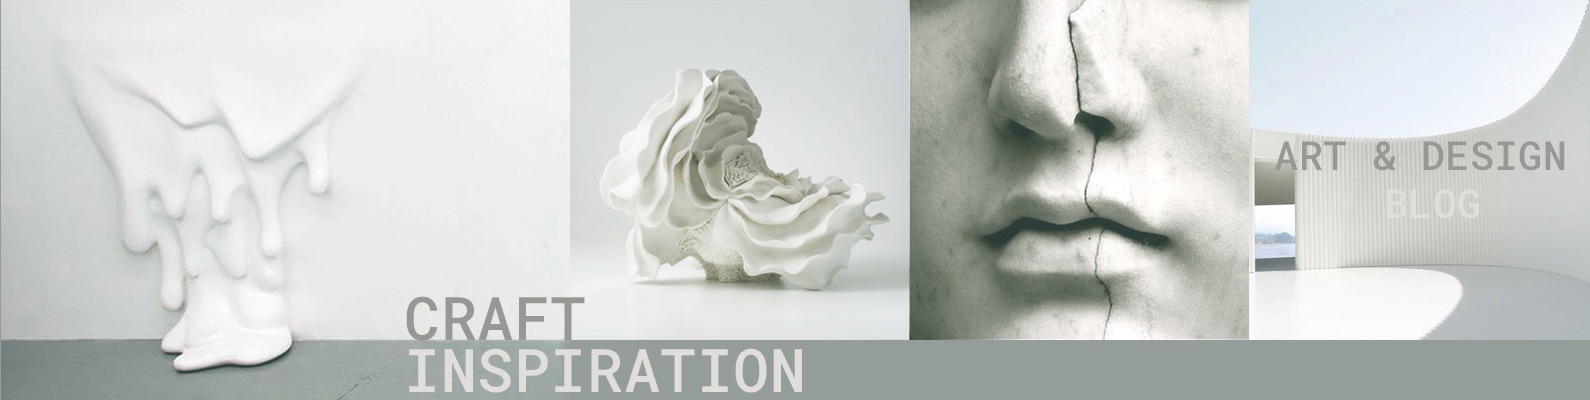 Craft inspiration | VK